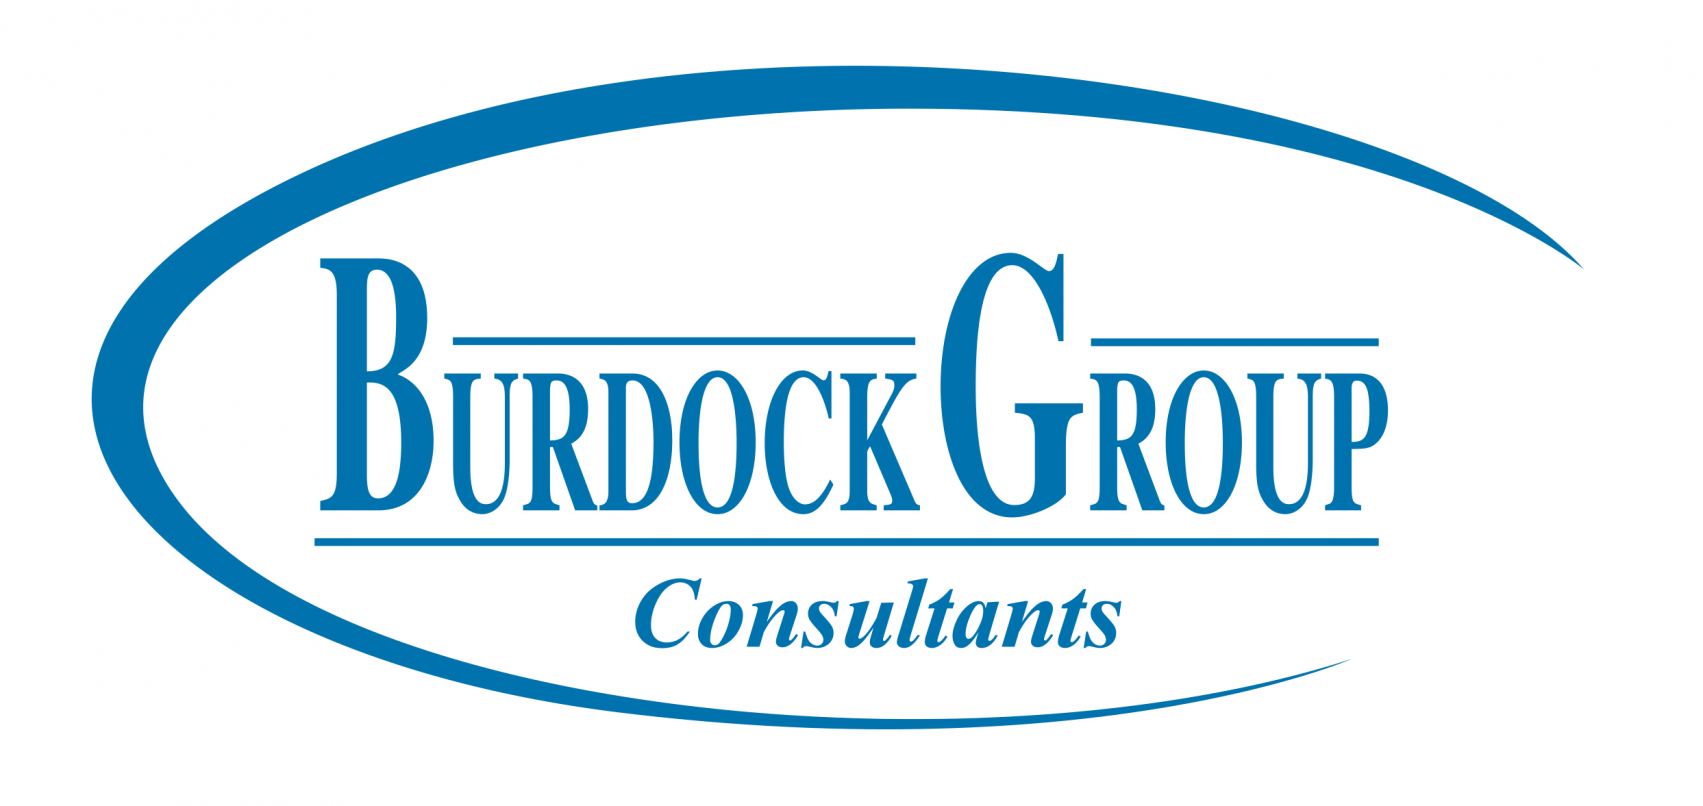 burdockgroup Logo